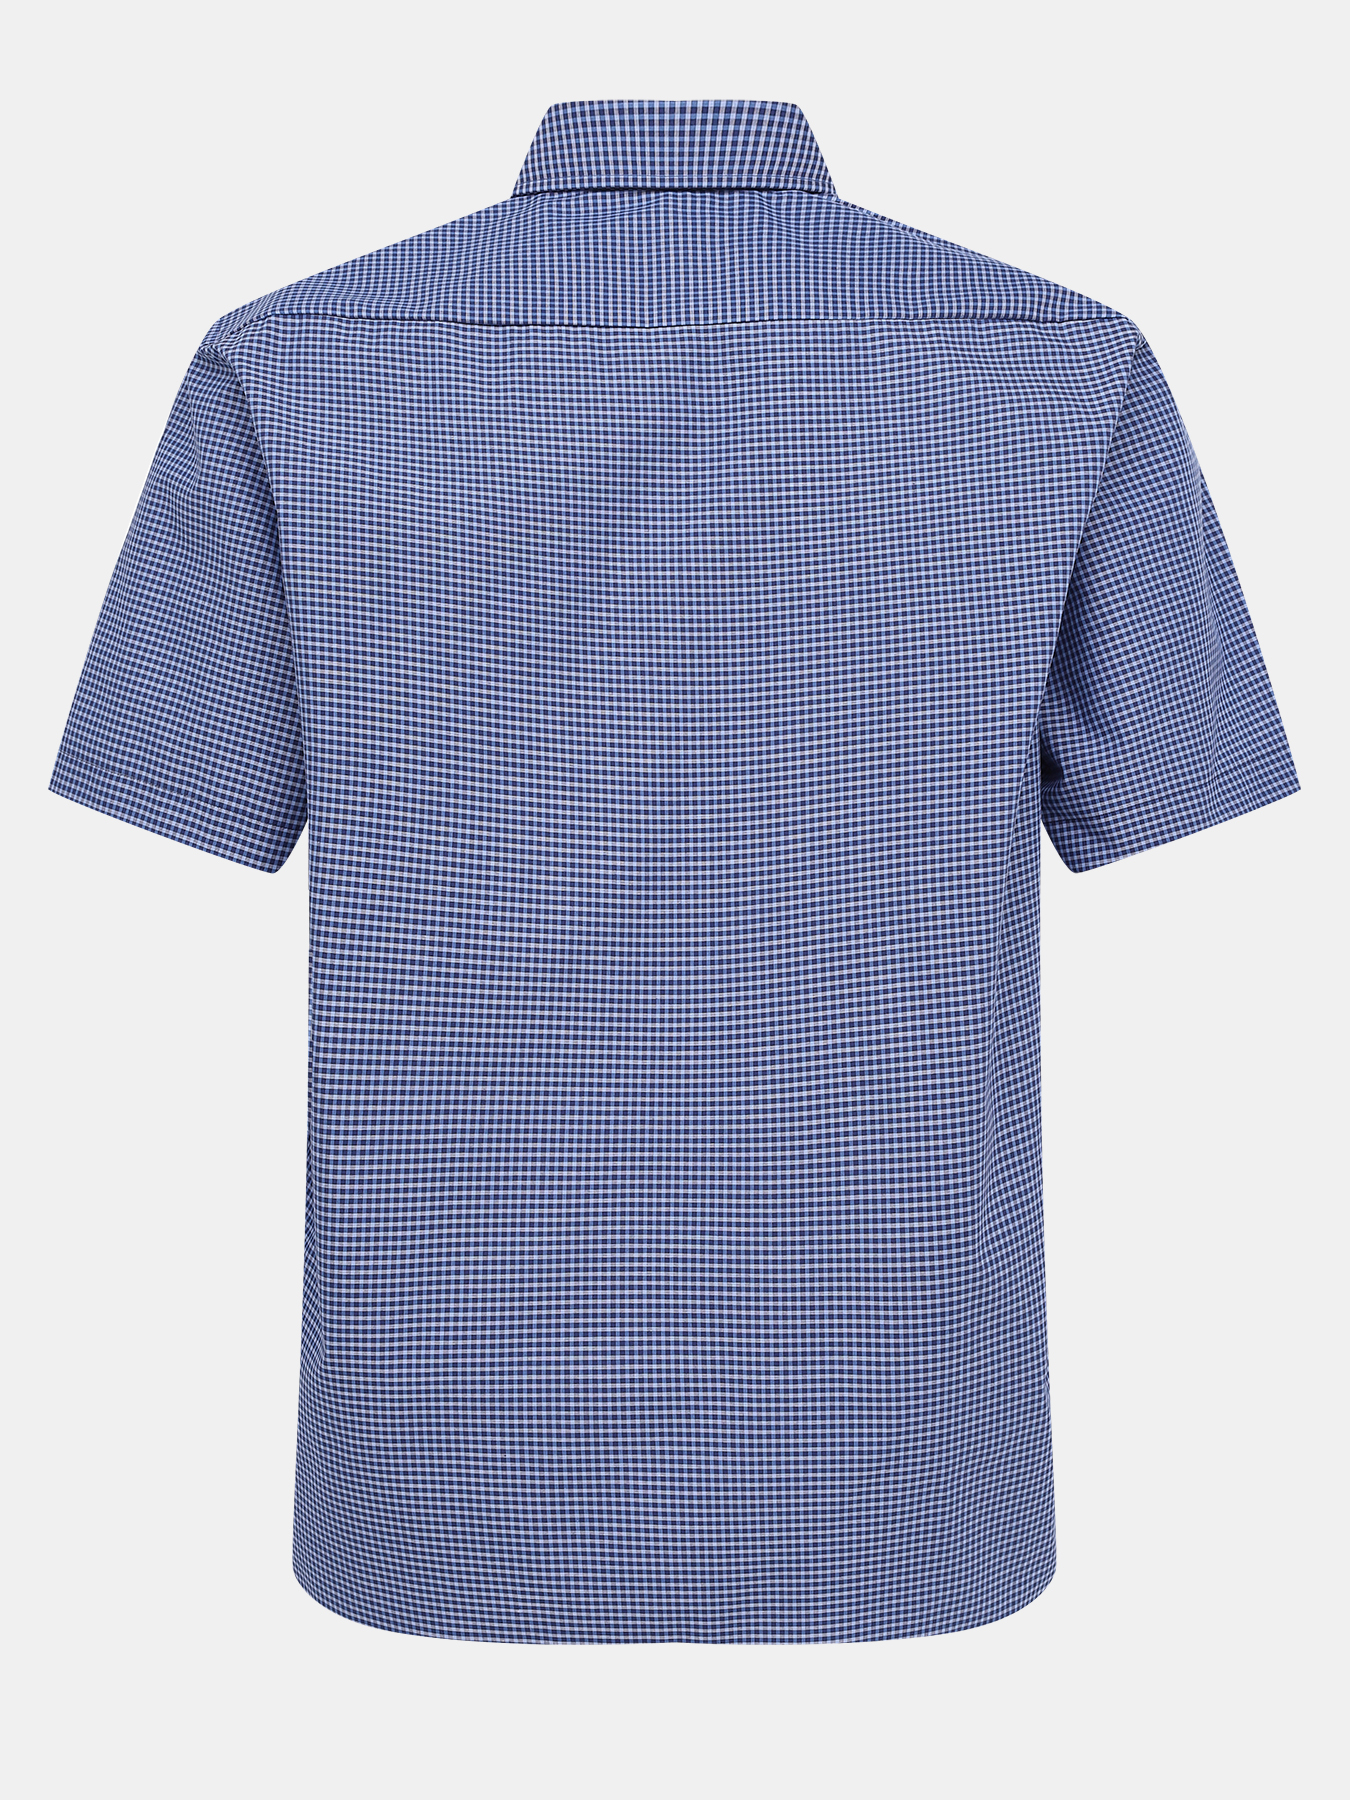 Рубашка Eterna 416186-024, цвет темно-синий, размер 62 - фото 2